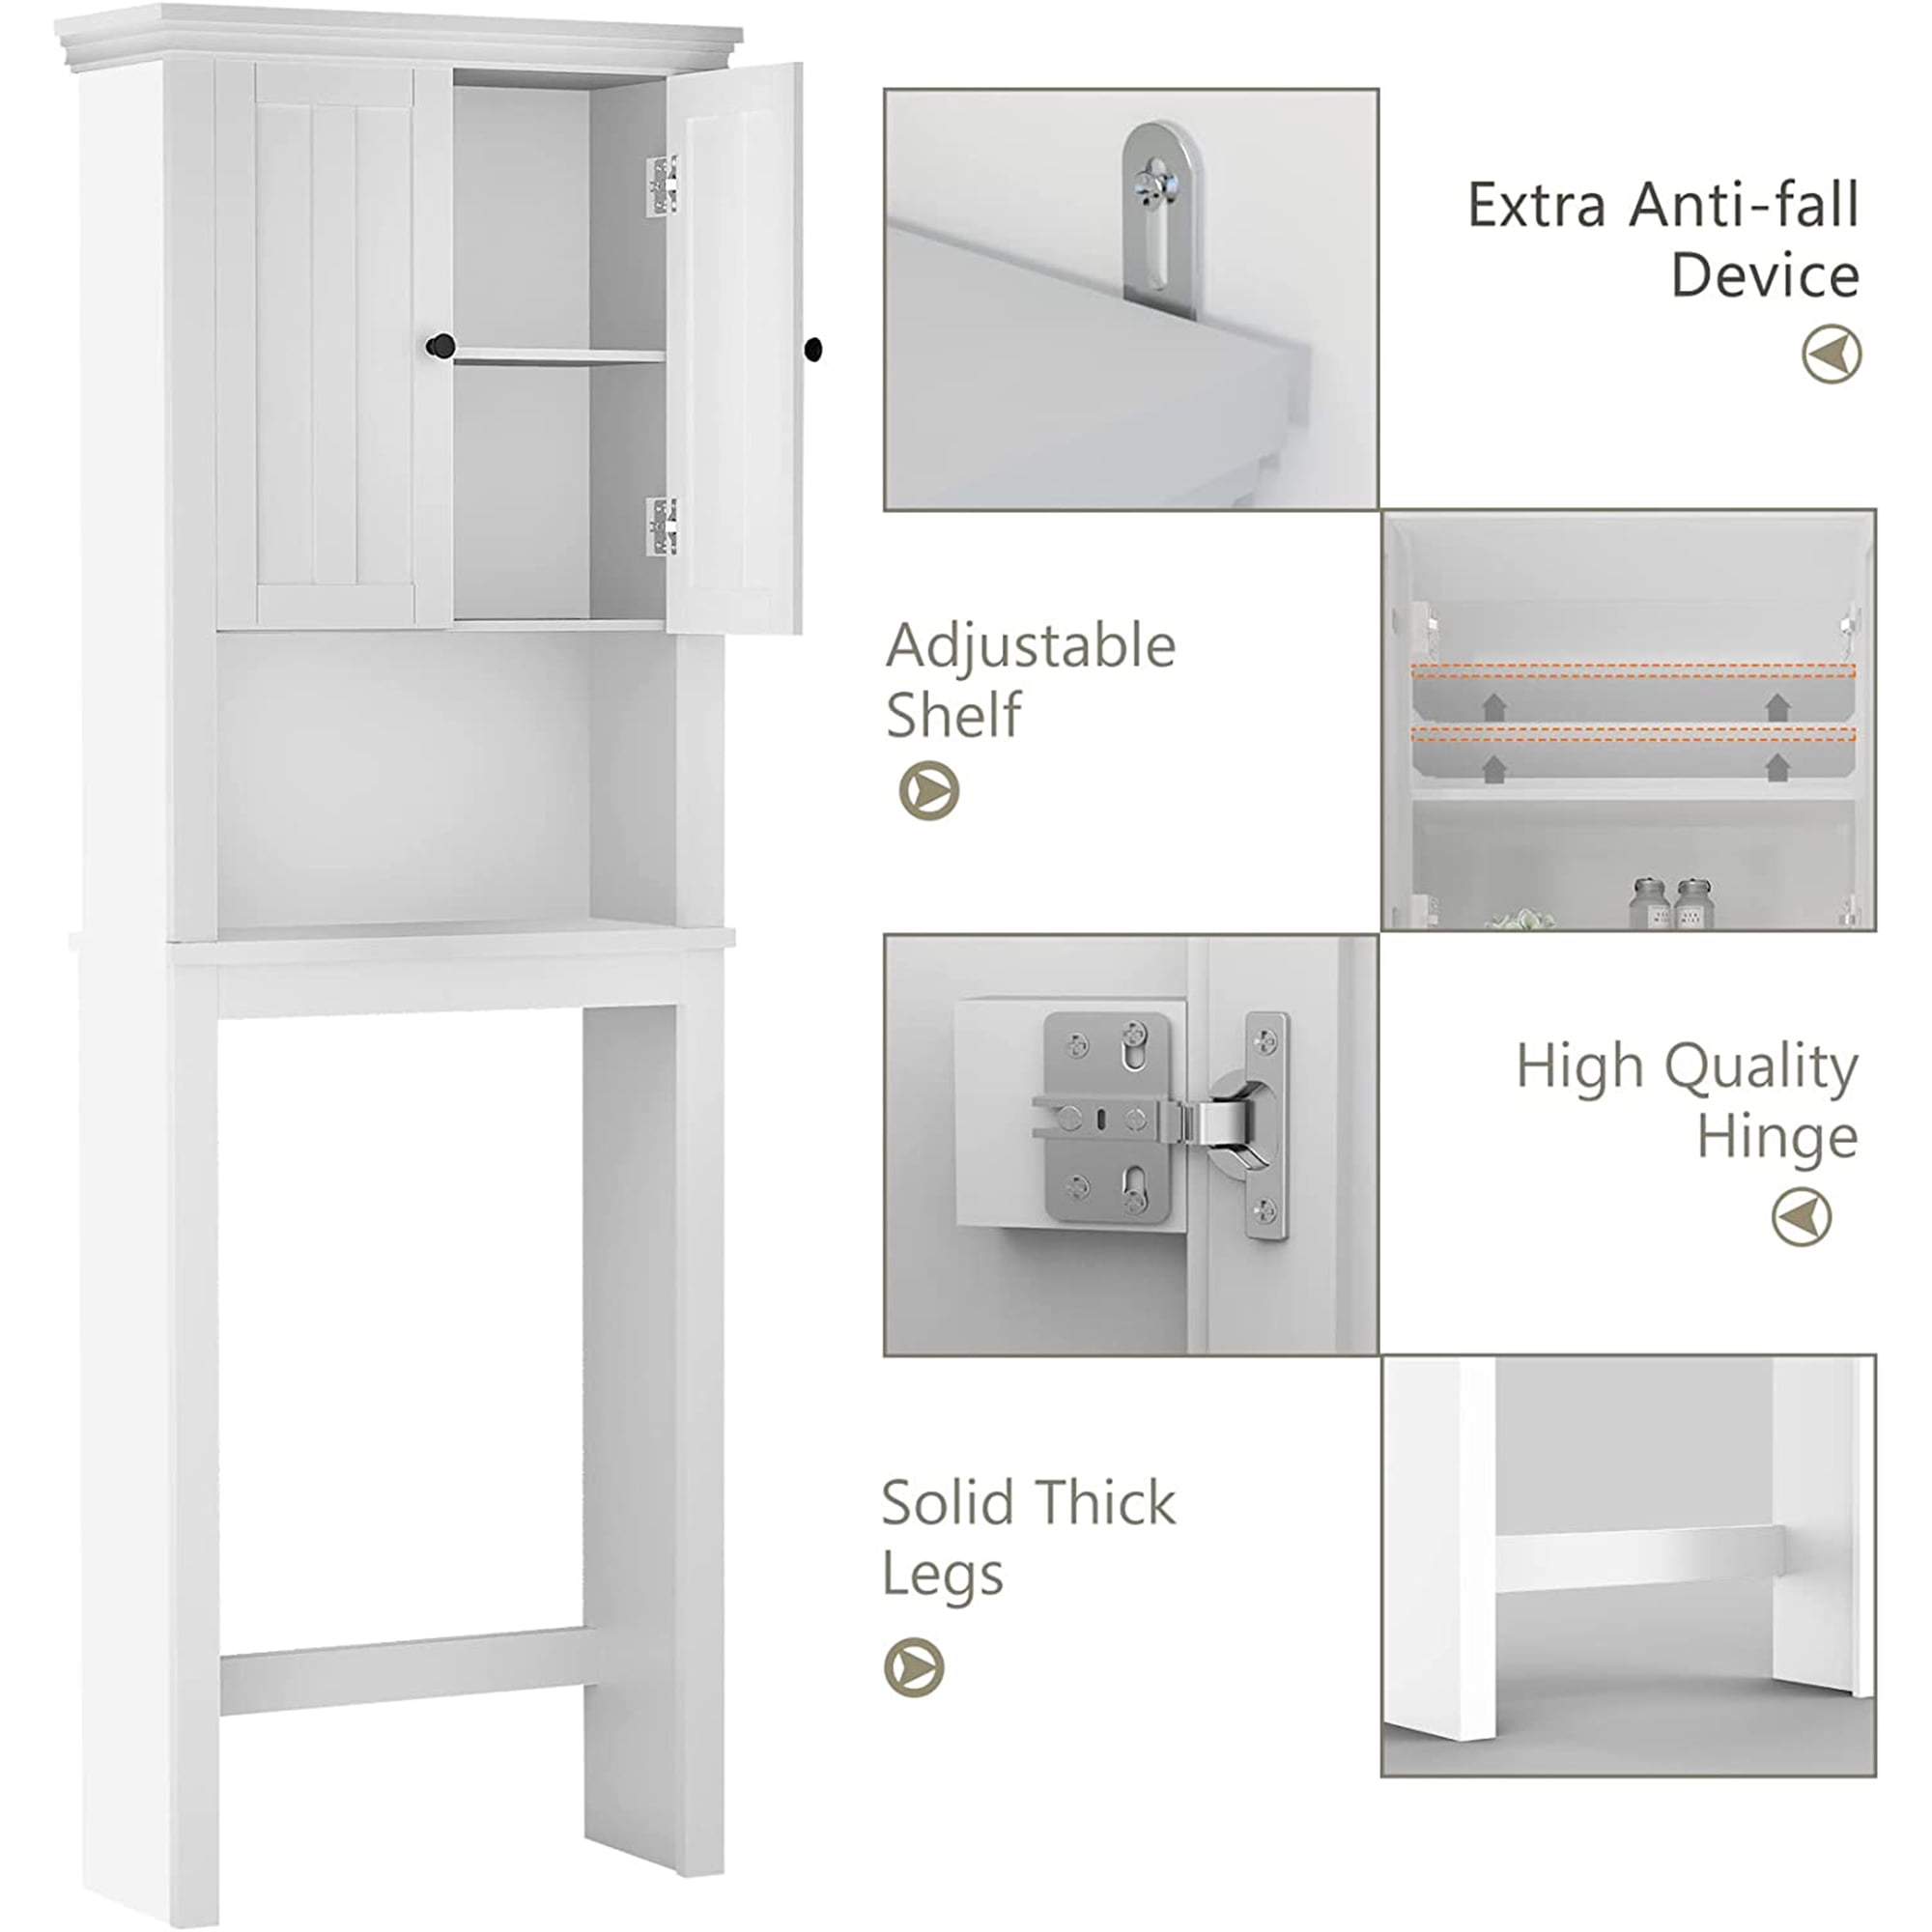 Meilocar Over The Toilet Storage Cabinet for Bathroom, Storage Organizer  Over Toilet, Space Saver W/Adjustable Shelf & Open Storage Shelf, 75in,  White